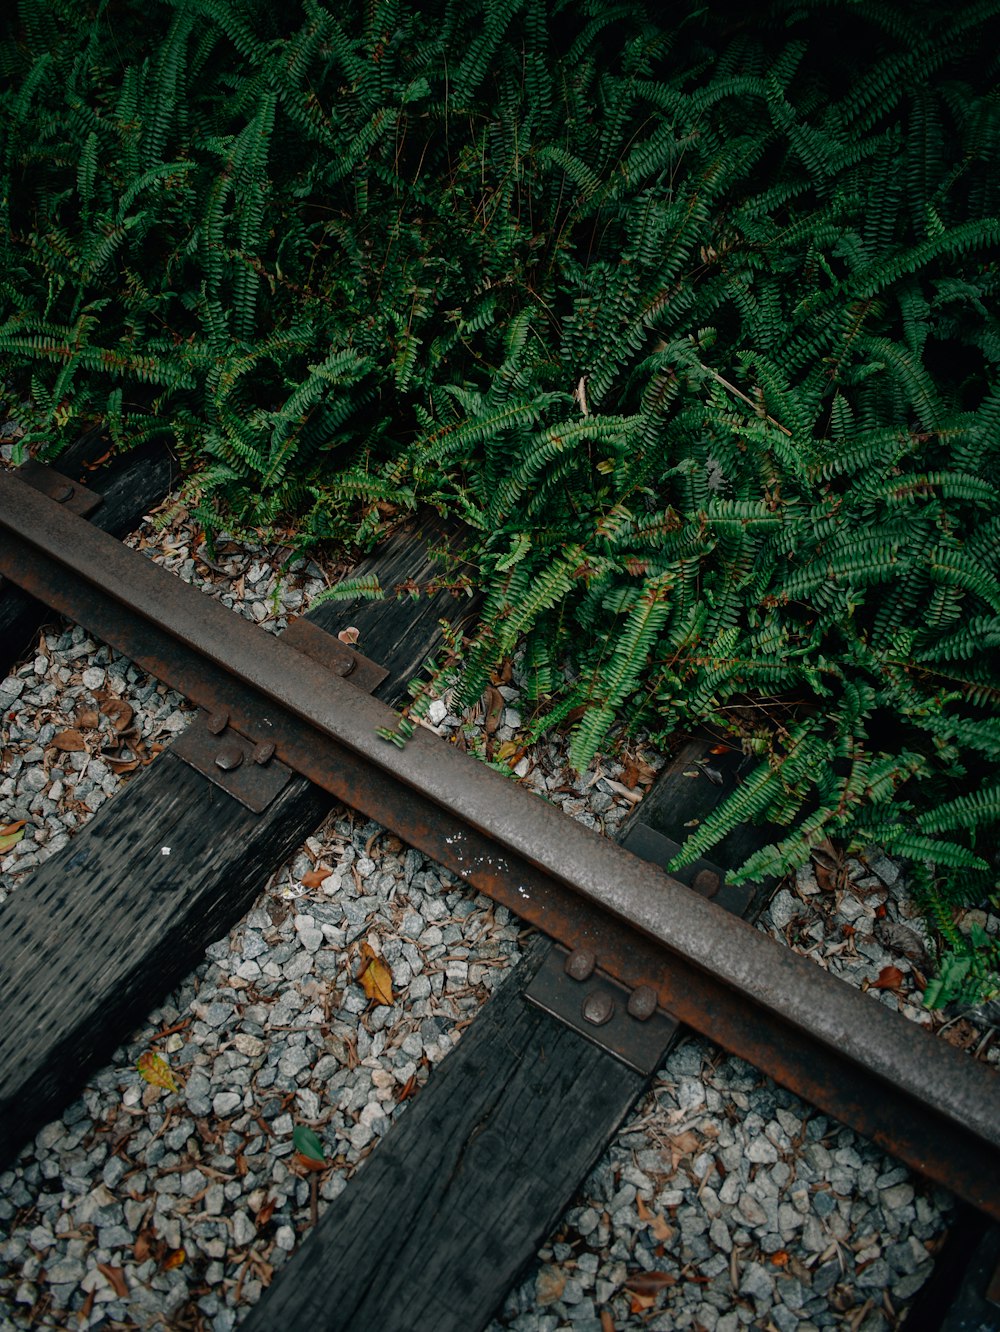 a close up of a train track near a bush